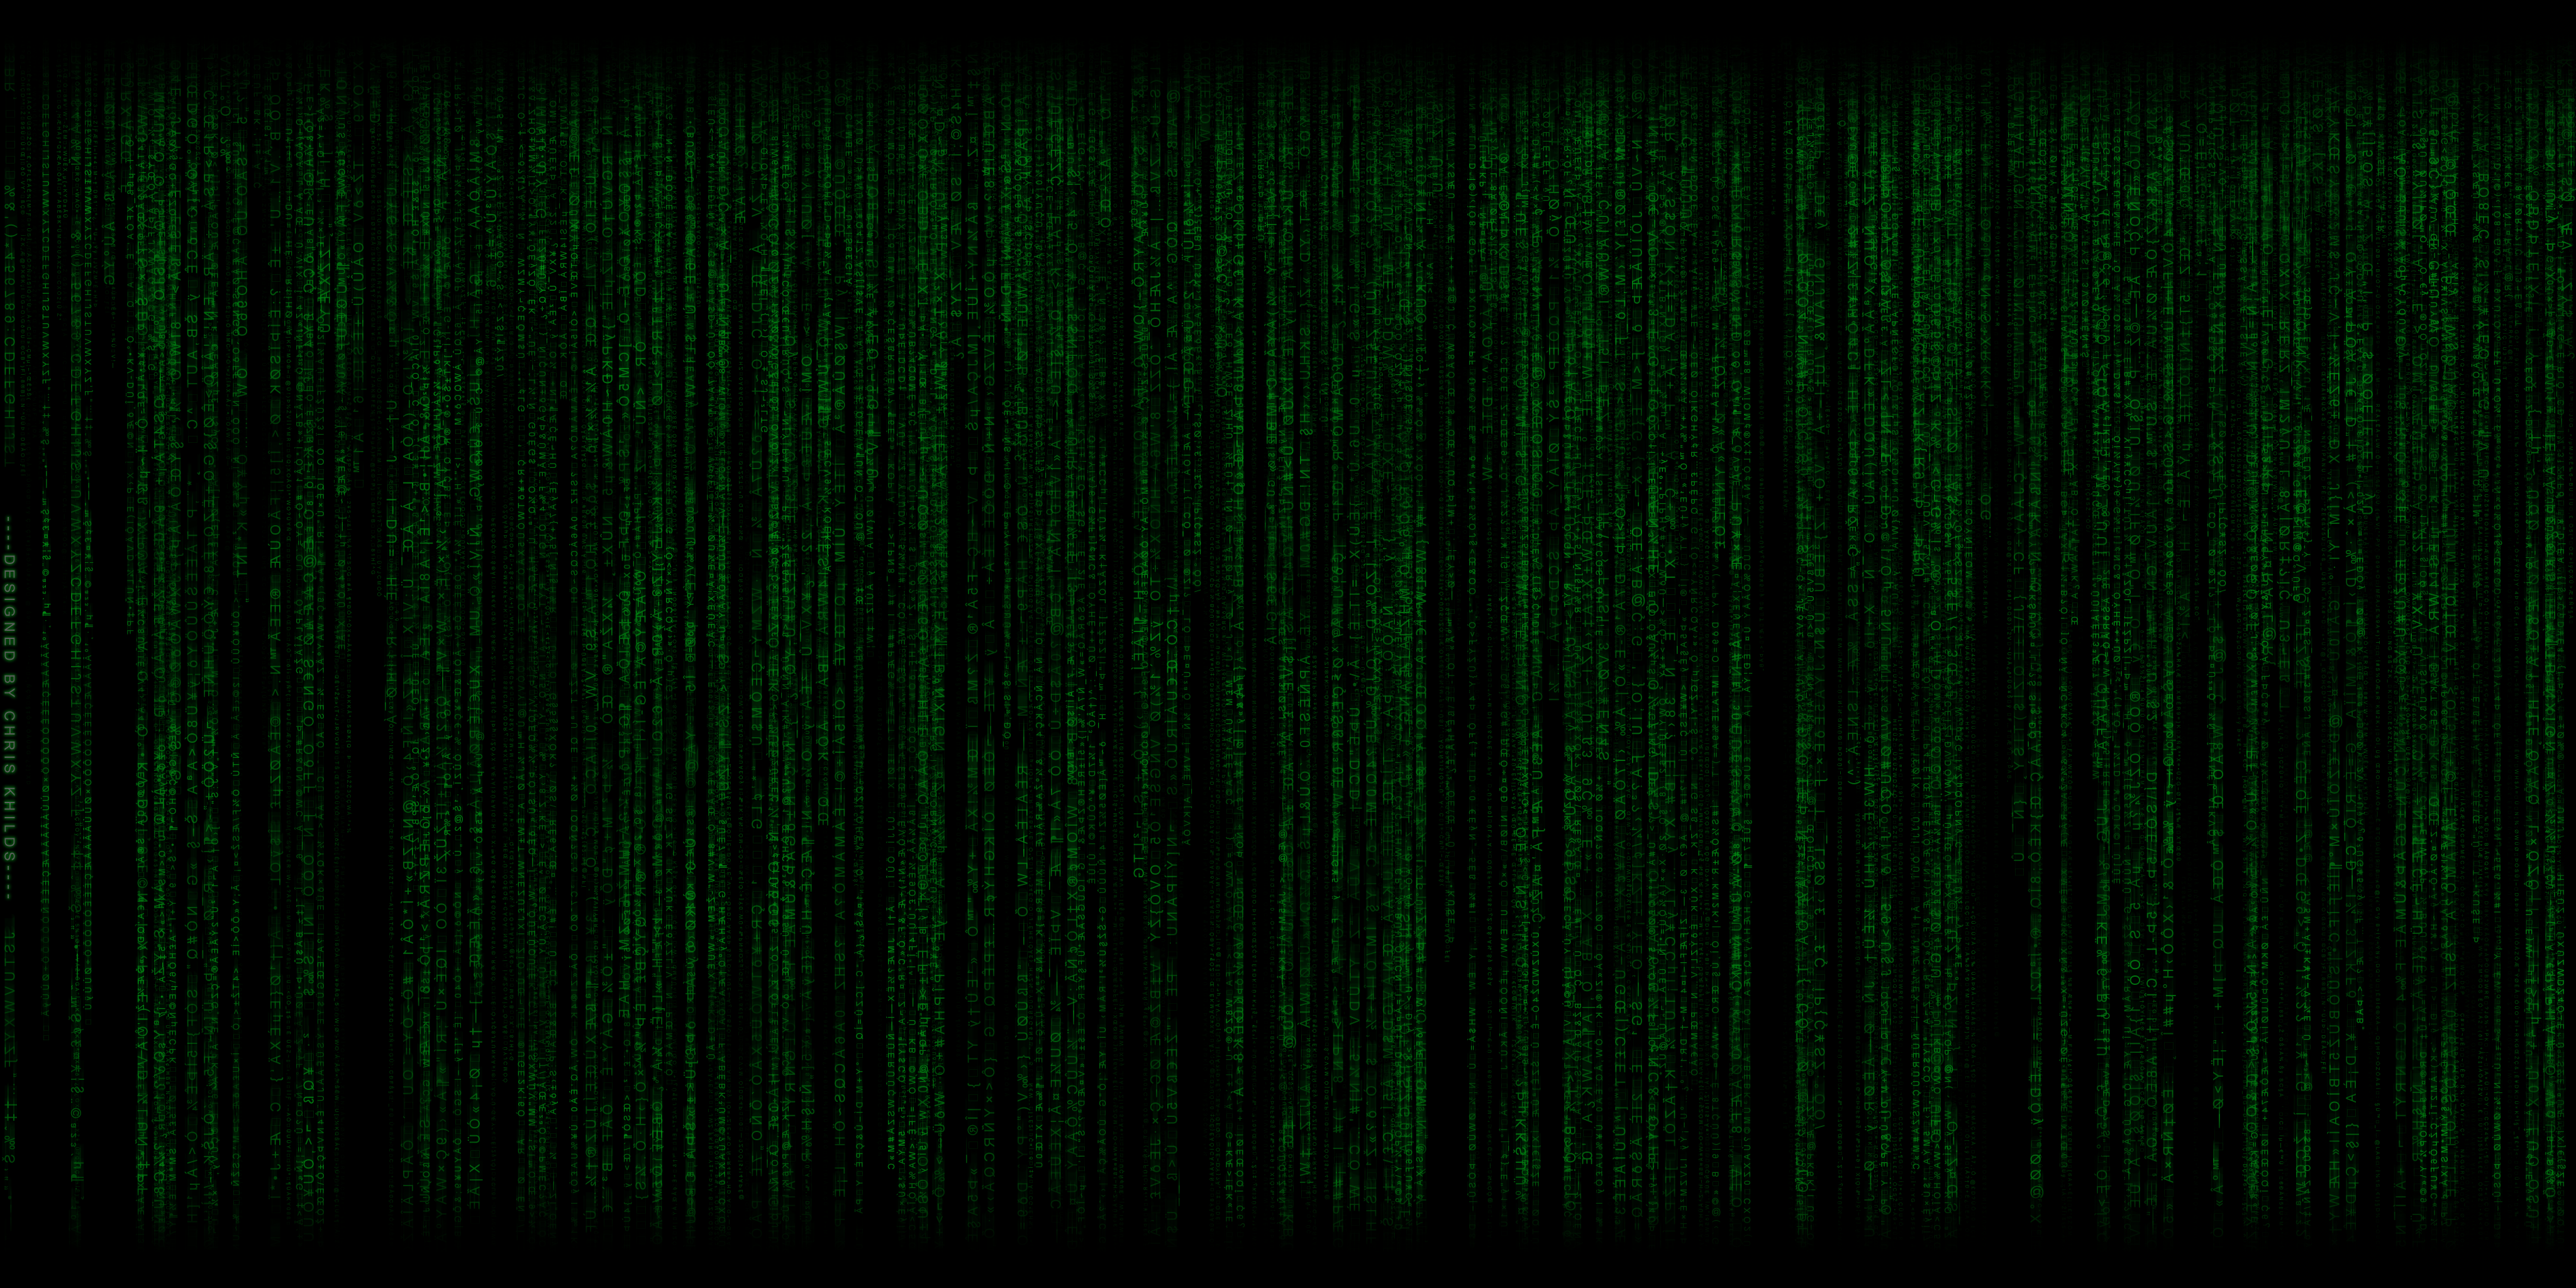 Matrix Code skydome  by Big-Bohn on DeviantArt